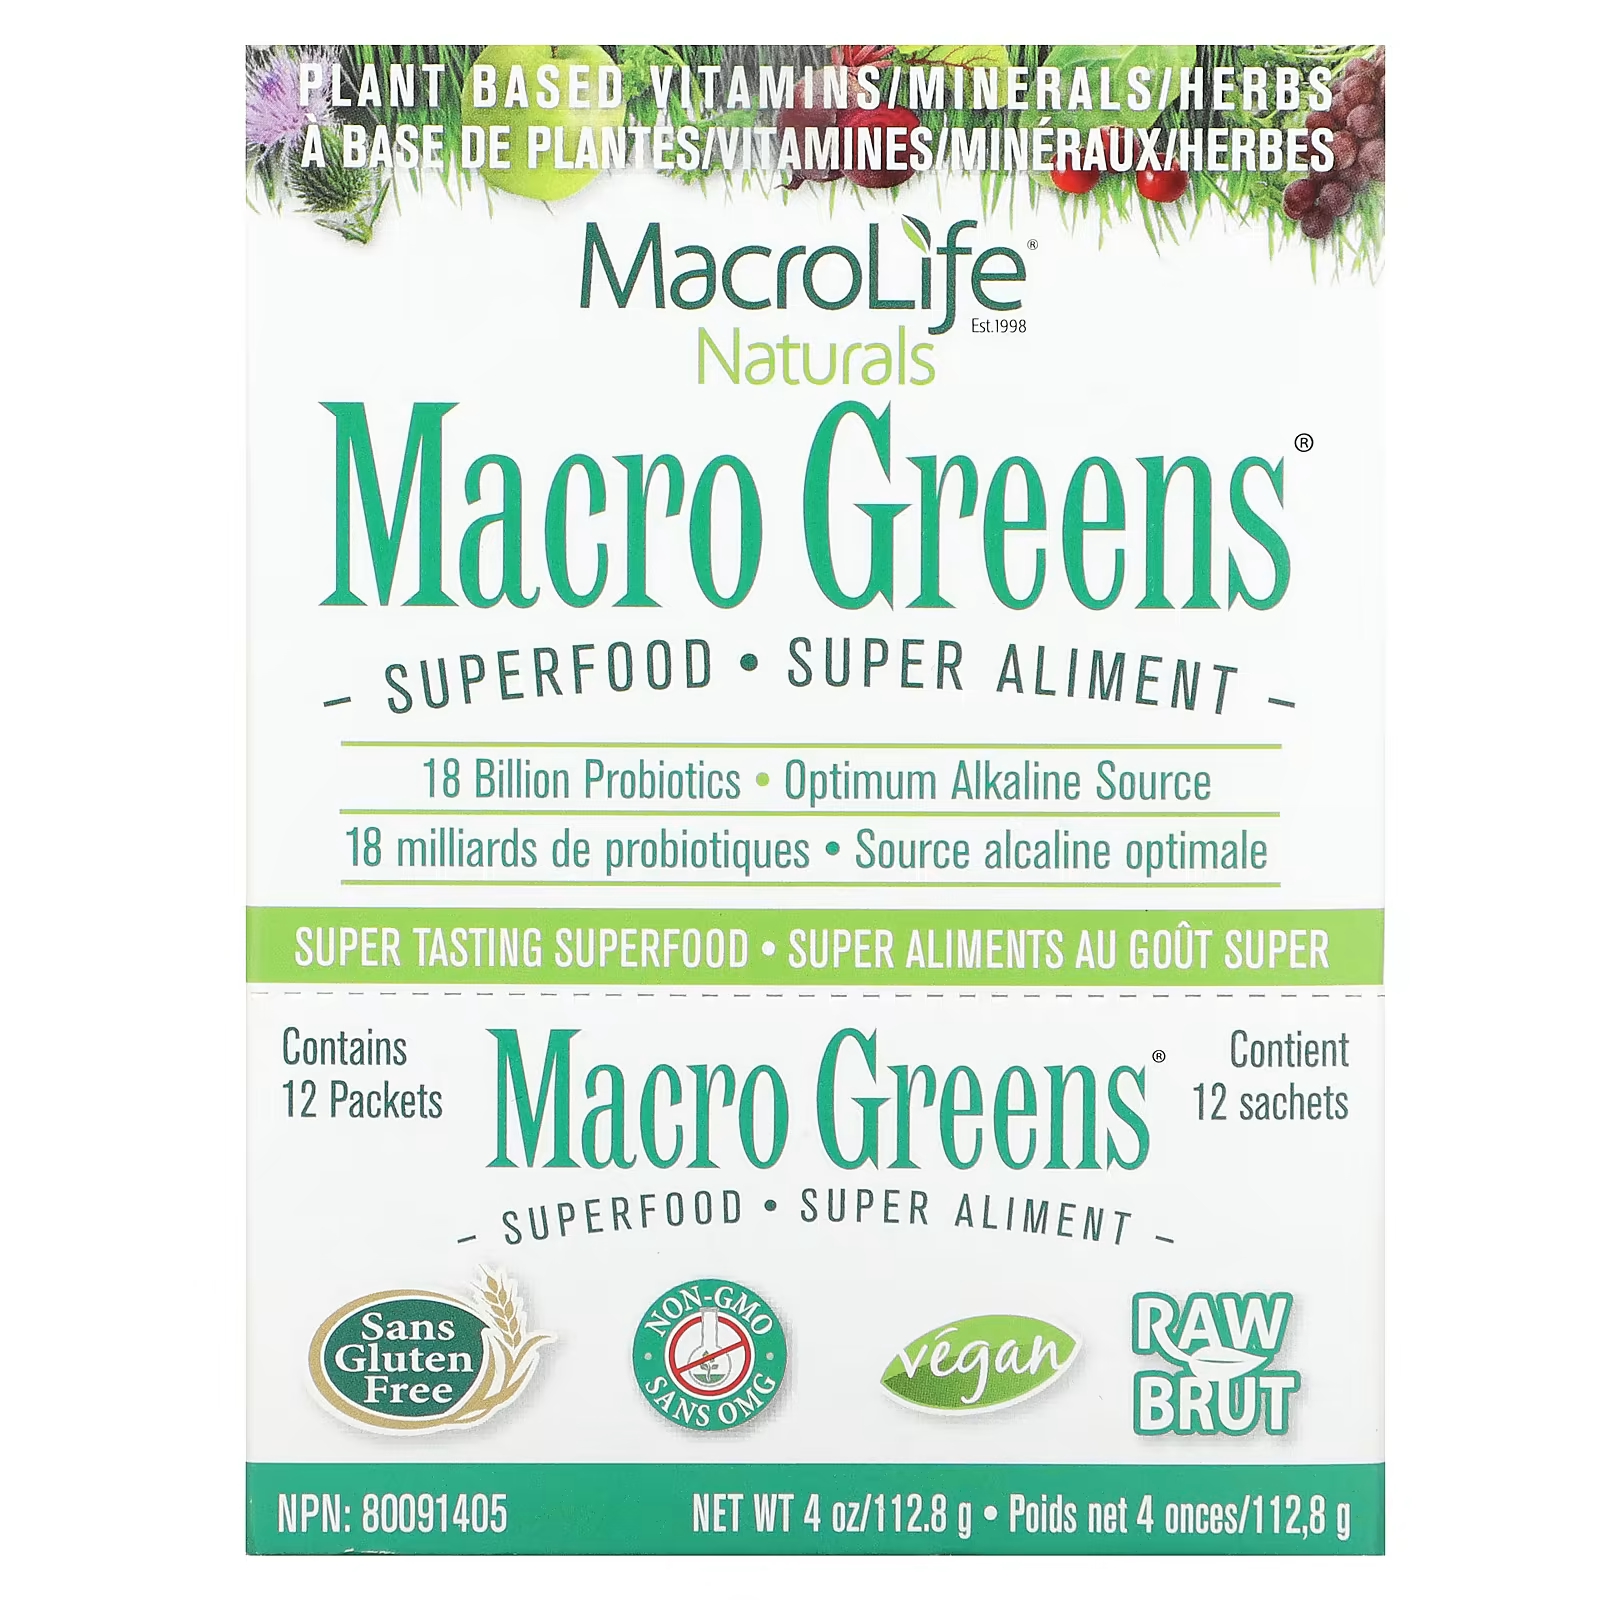 Macrolife Naturals Macro Greens Superfood 12 пакетов по 0,3 унции (9,4 г) каждый